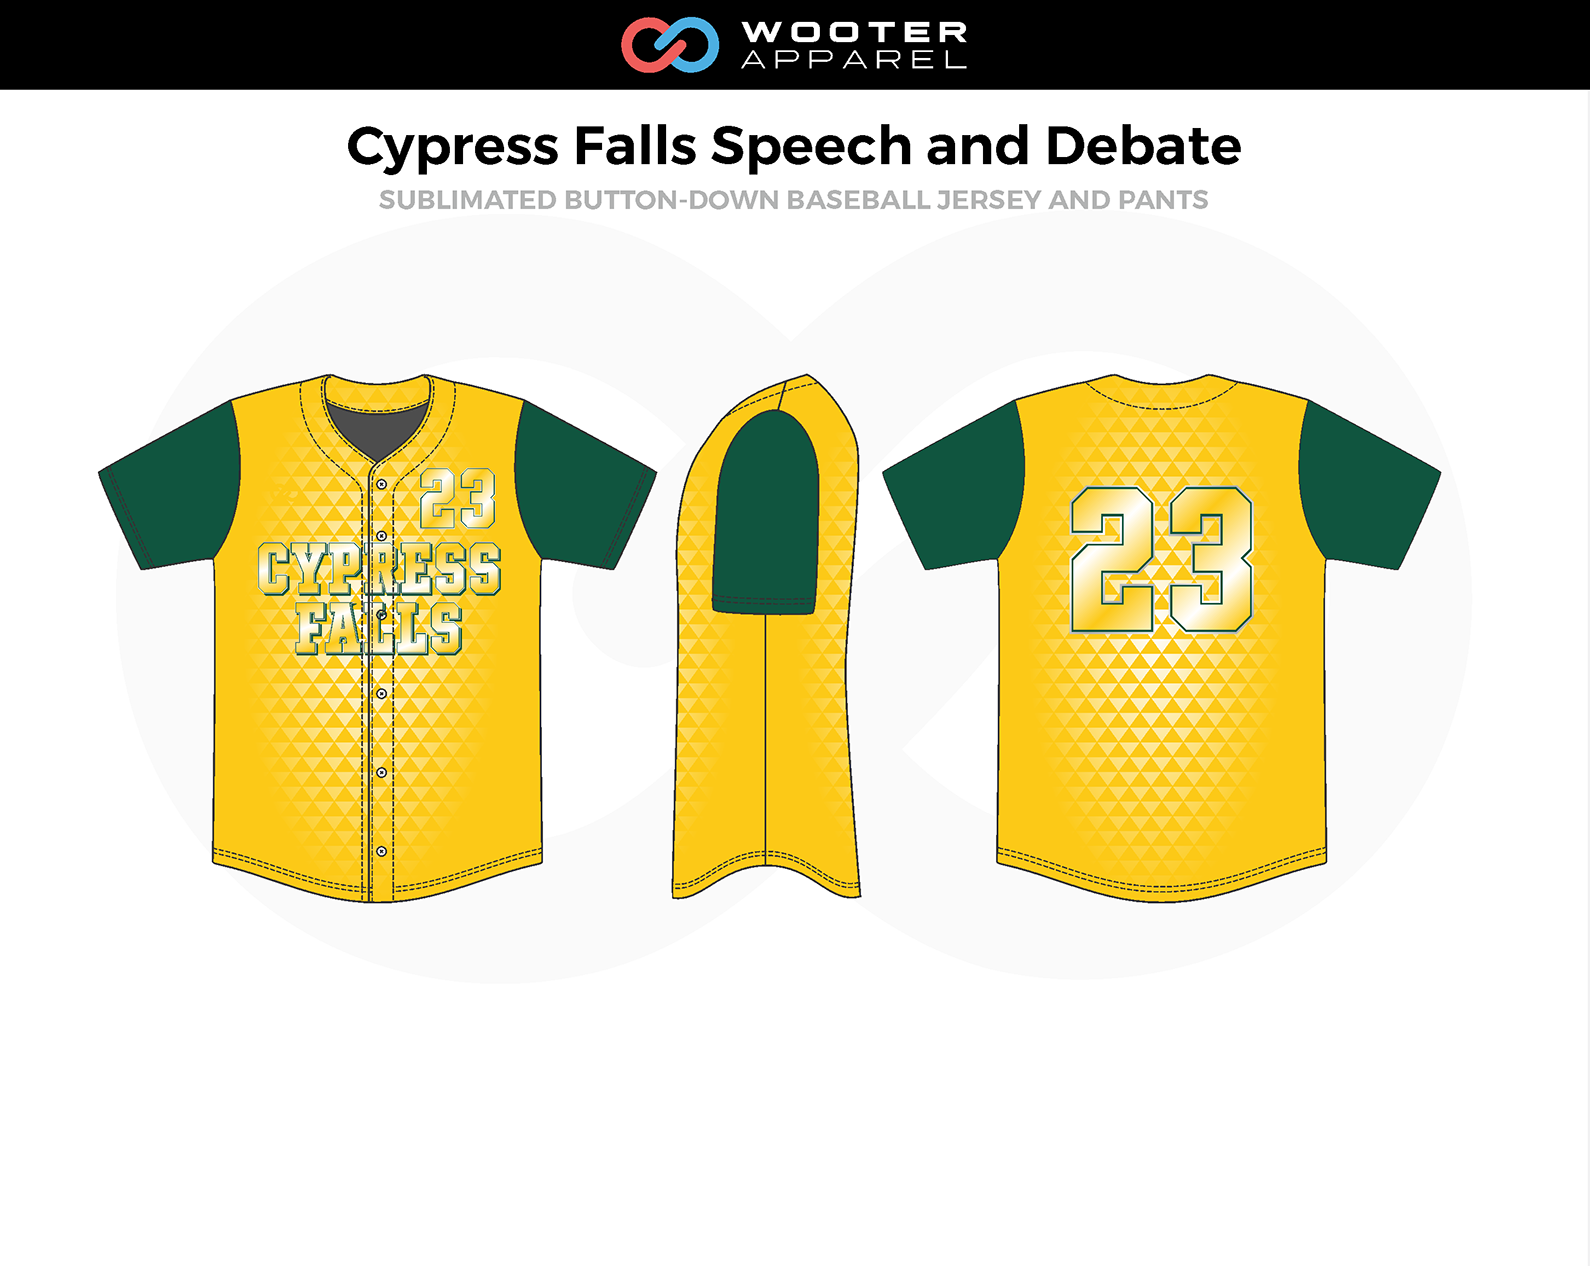 2018-09-10 Cypress Falls Speech and Debate 3.png